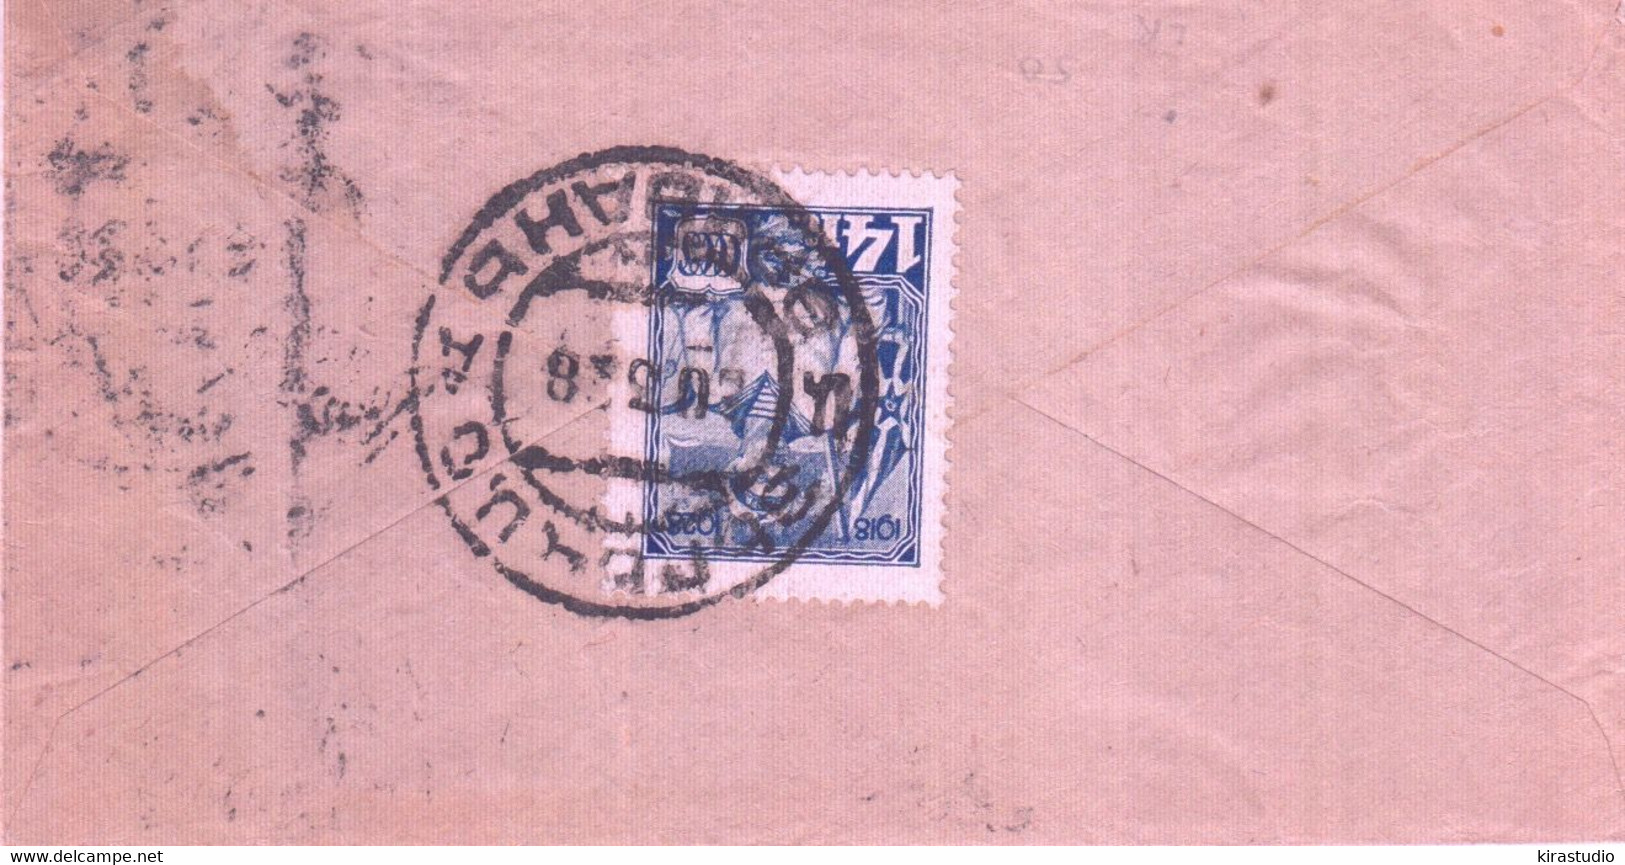 Postal History USSR Small Size Letter Erivan Armenia Republic - Covers & Documents